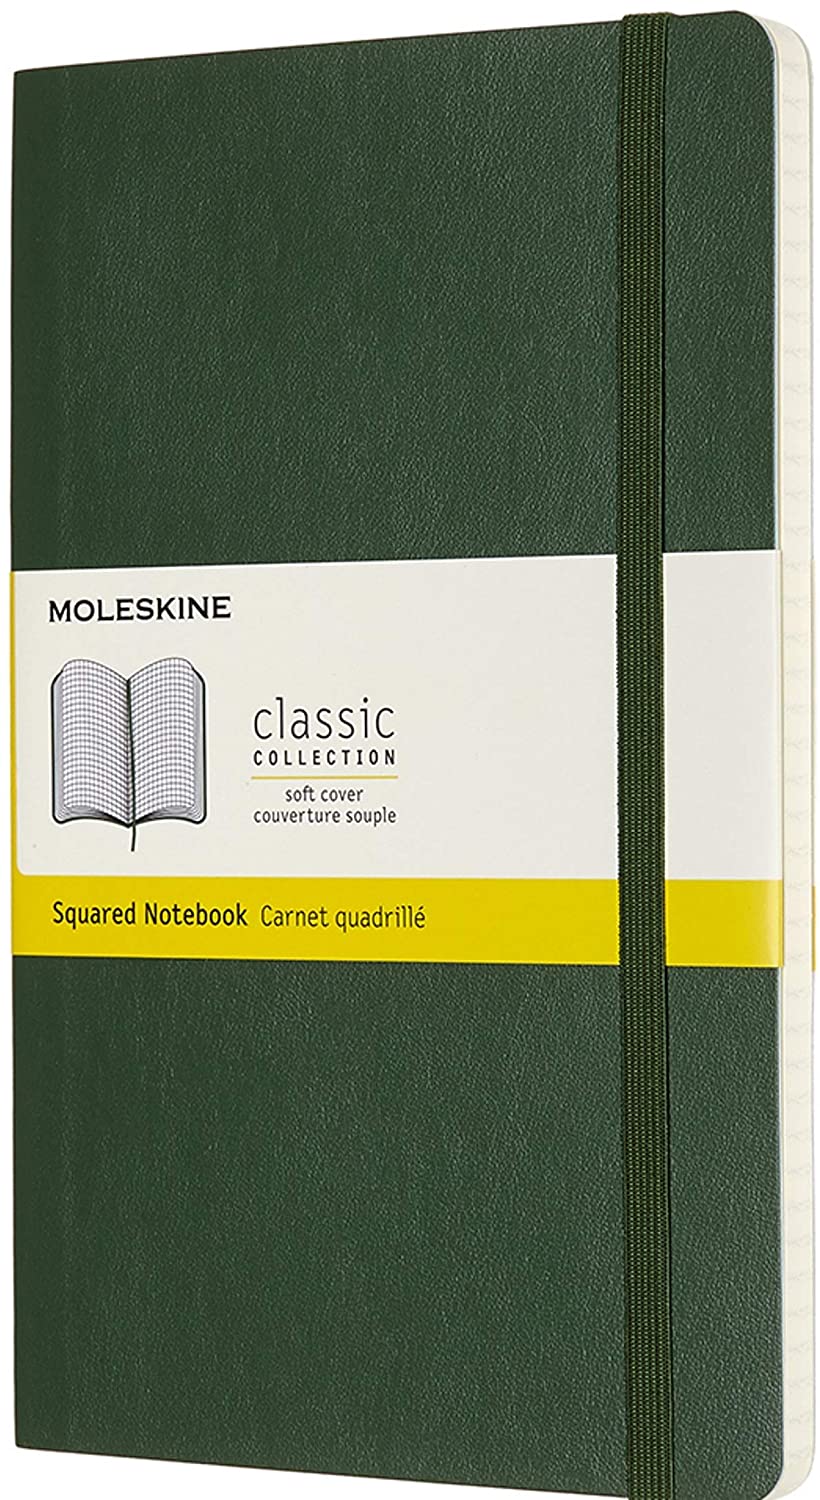 Carnet - Moleskine Classic - Soft Cover, Large, Squared - Myrtle Green | Moleskine image0